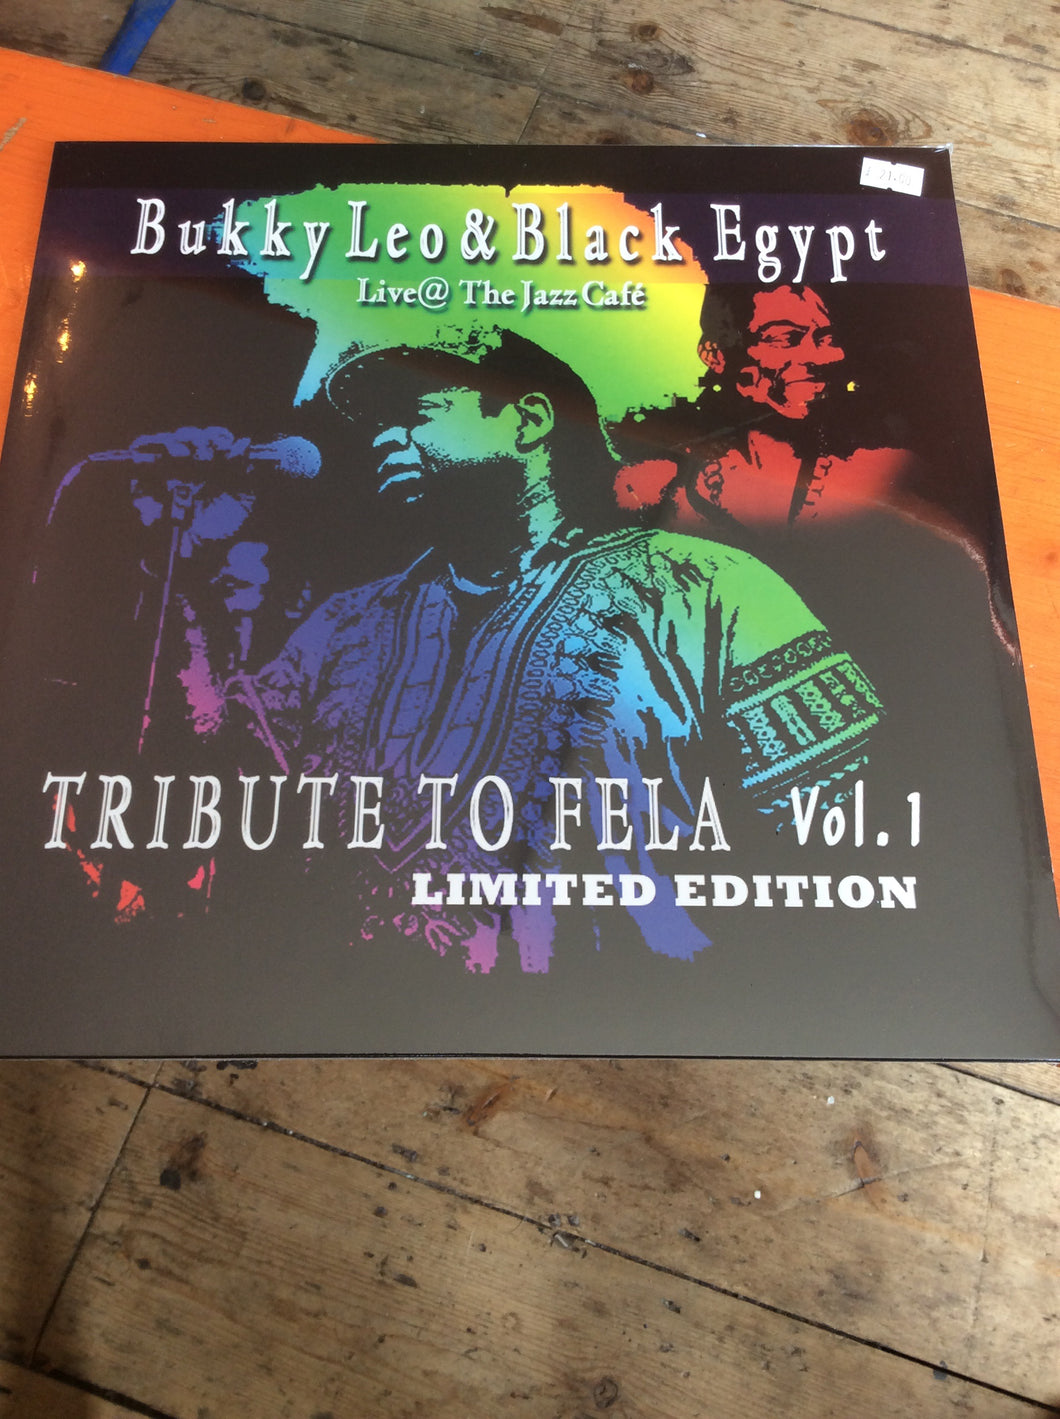 Bukky Leo & Black Egypt - Live @ The Jazz Cafe - Tribute to Fela Vol. 1